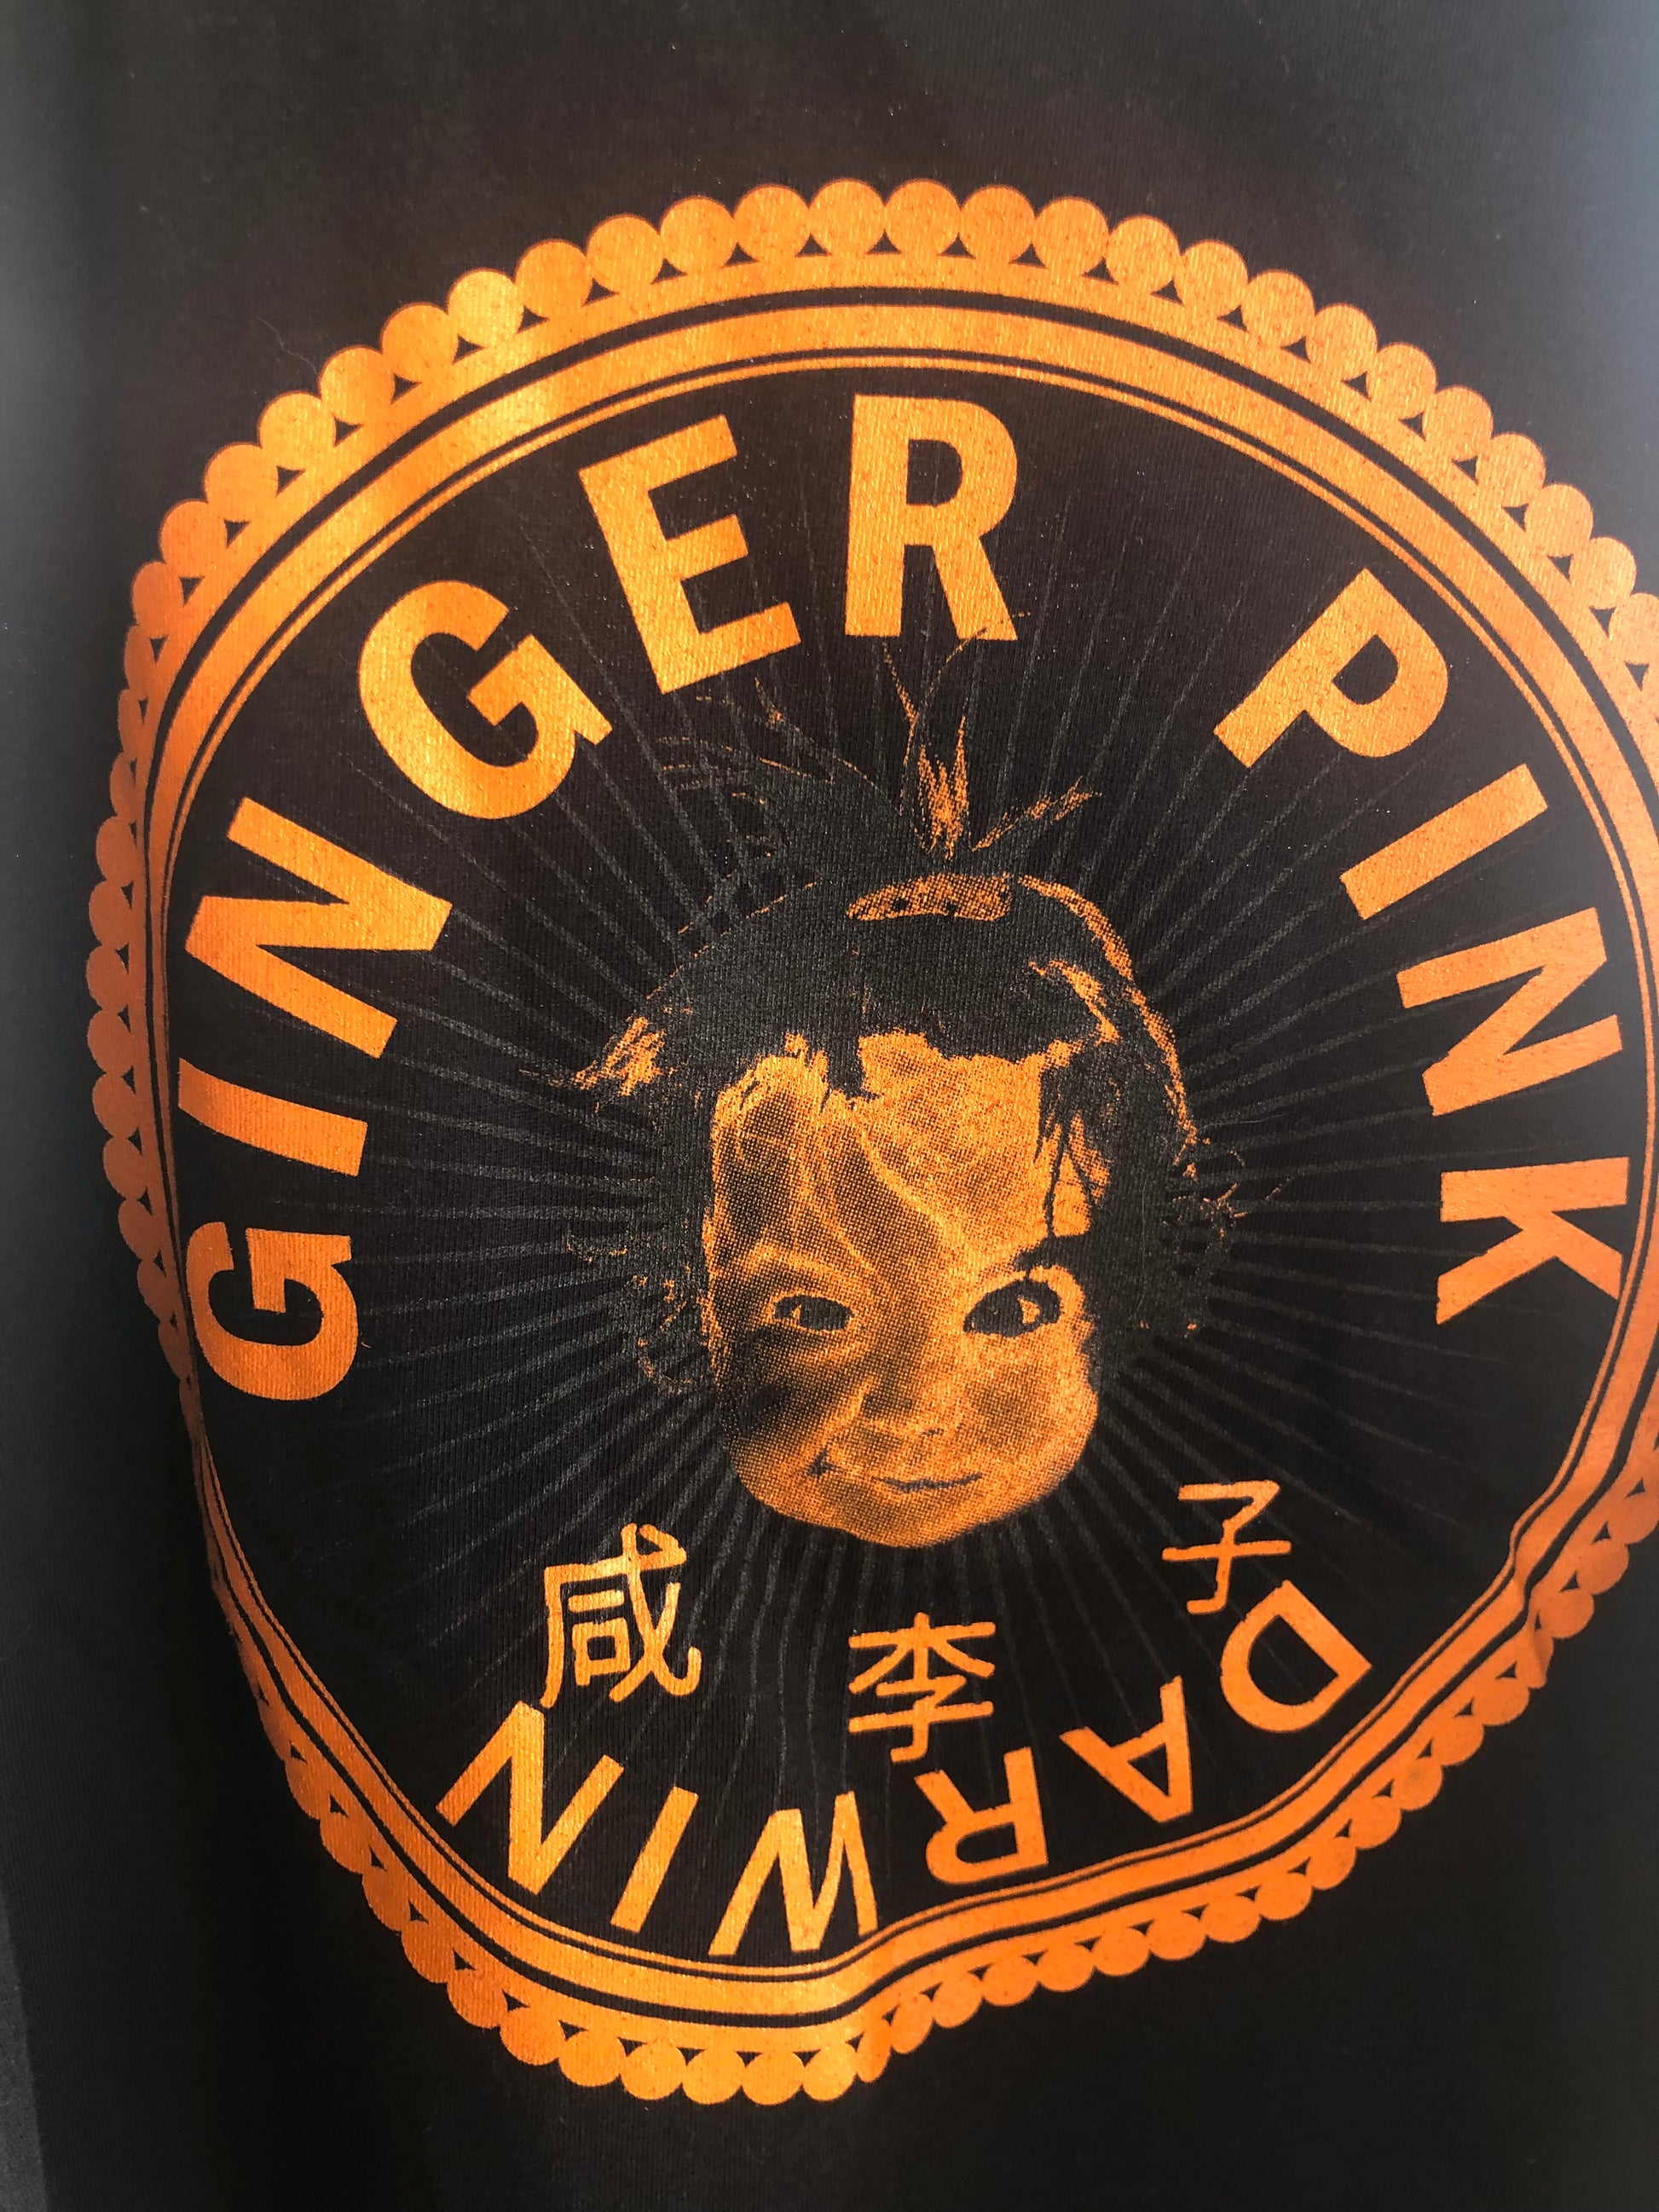 GP (Boy or Girl Logo) ‘Dancer’ Singlet in Black - Ginger Pink Darwin - ethical fashion - darwin clothing shop - darwin clothing store - darwin fashion